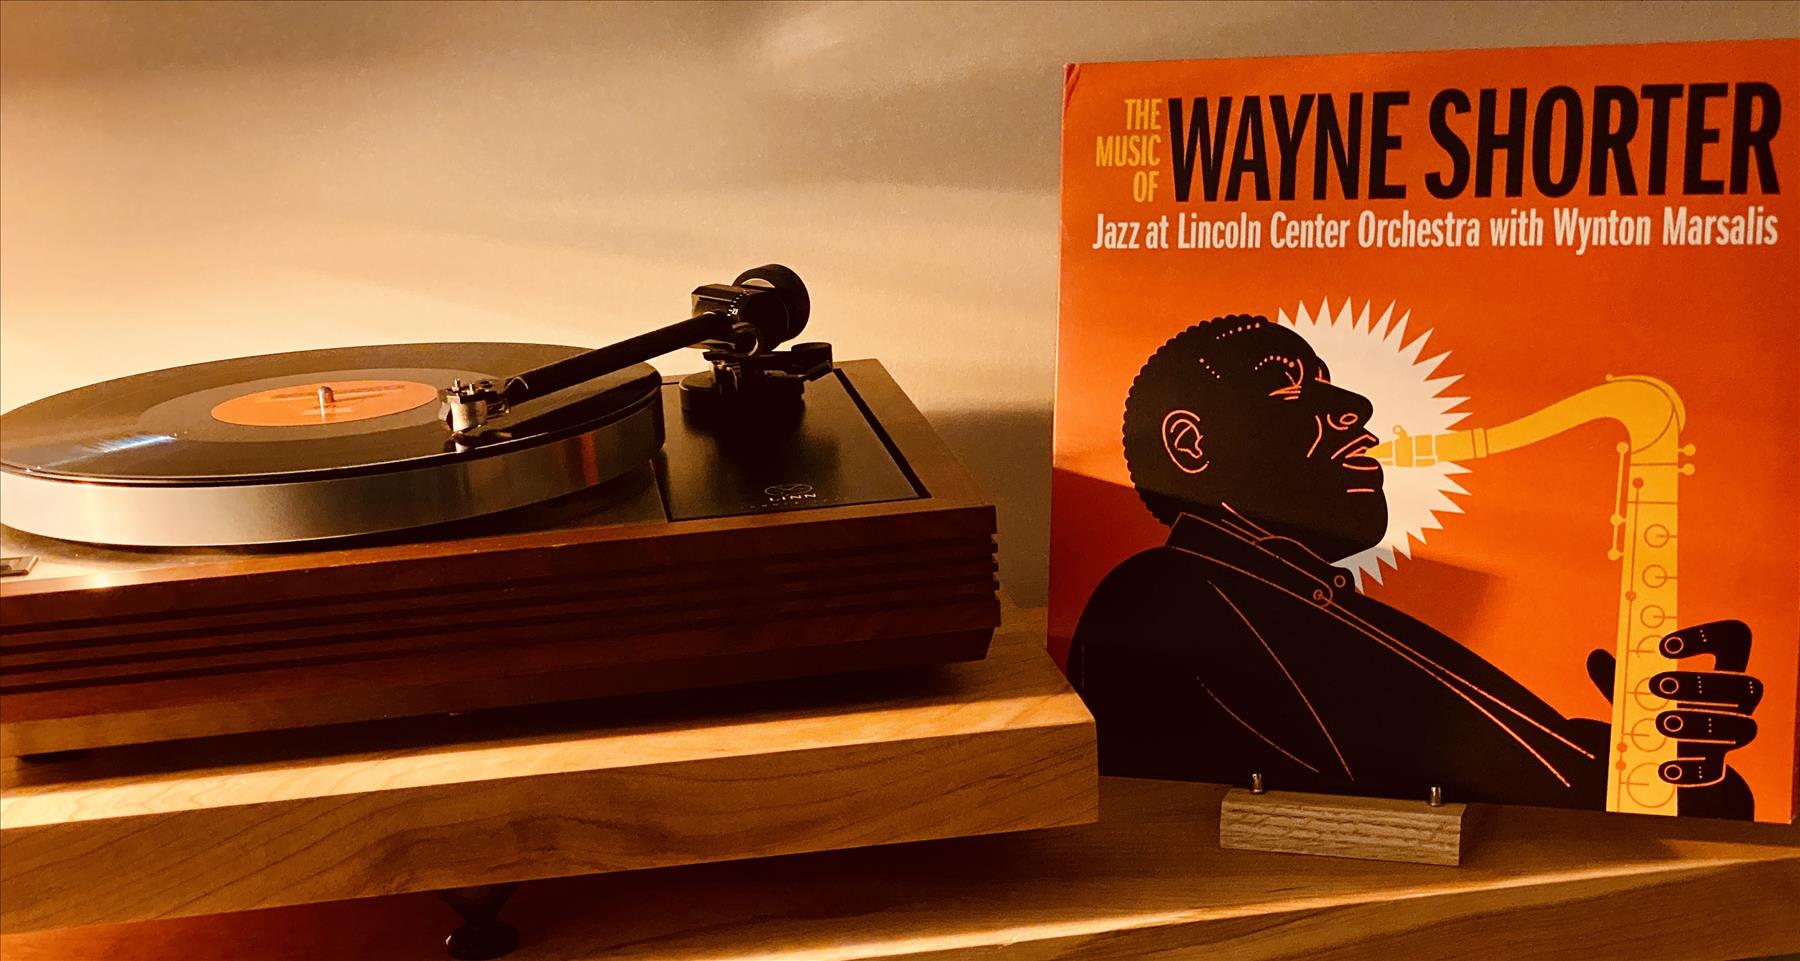 The Music of Wayne Shorter through a celebratory recap by Wynton Marsalis & JLCO